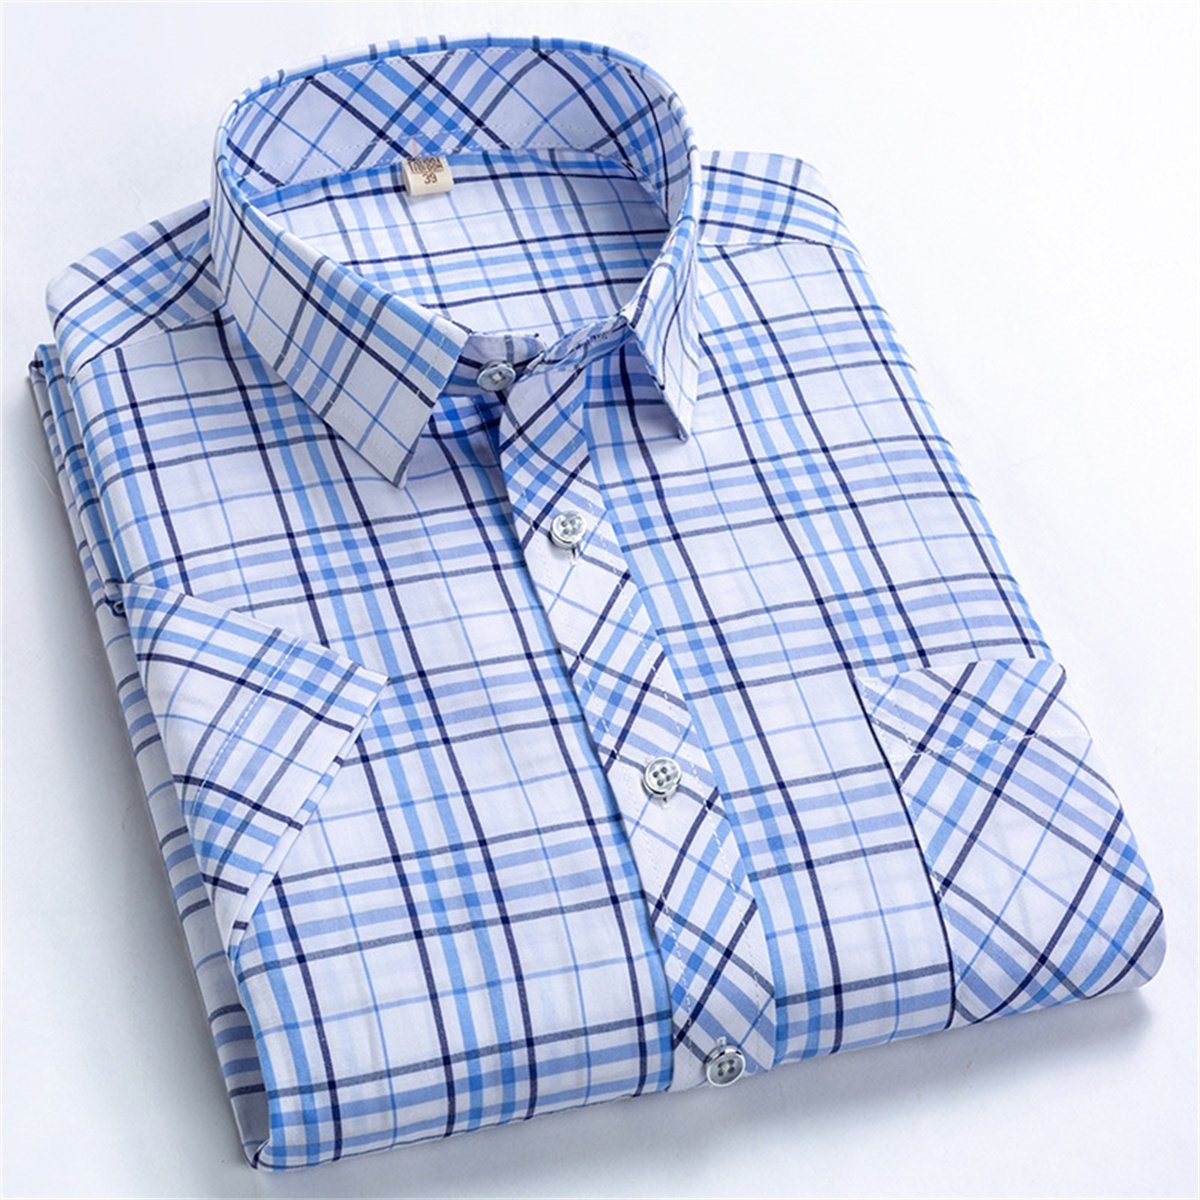 Discaver Trachtenhemd Herrenhemd, reguläre Passform, kurzärmlig, lässiges Popeline-Hemd Weiß